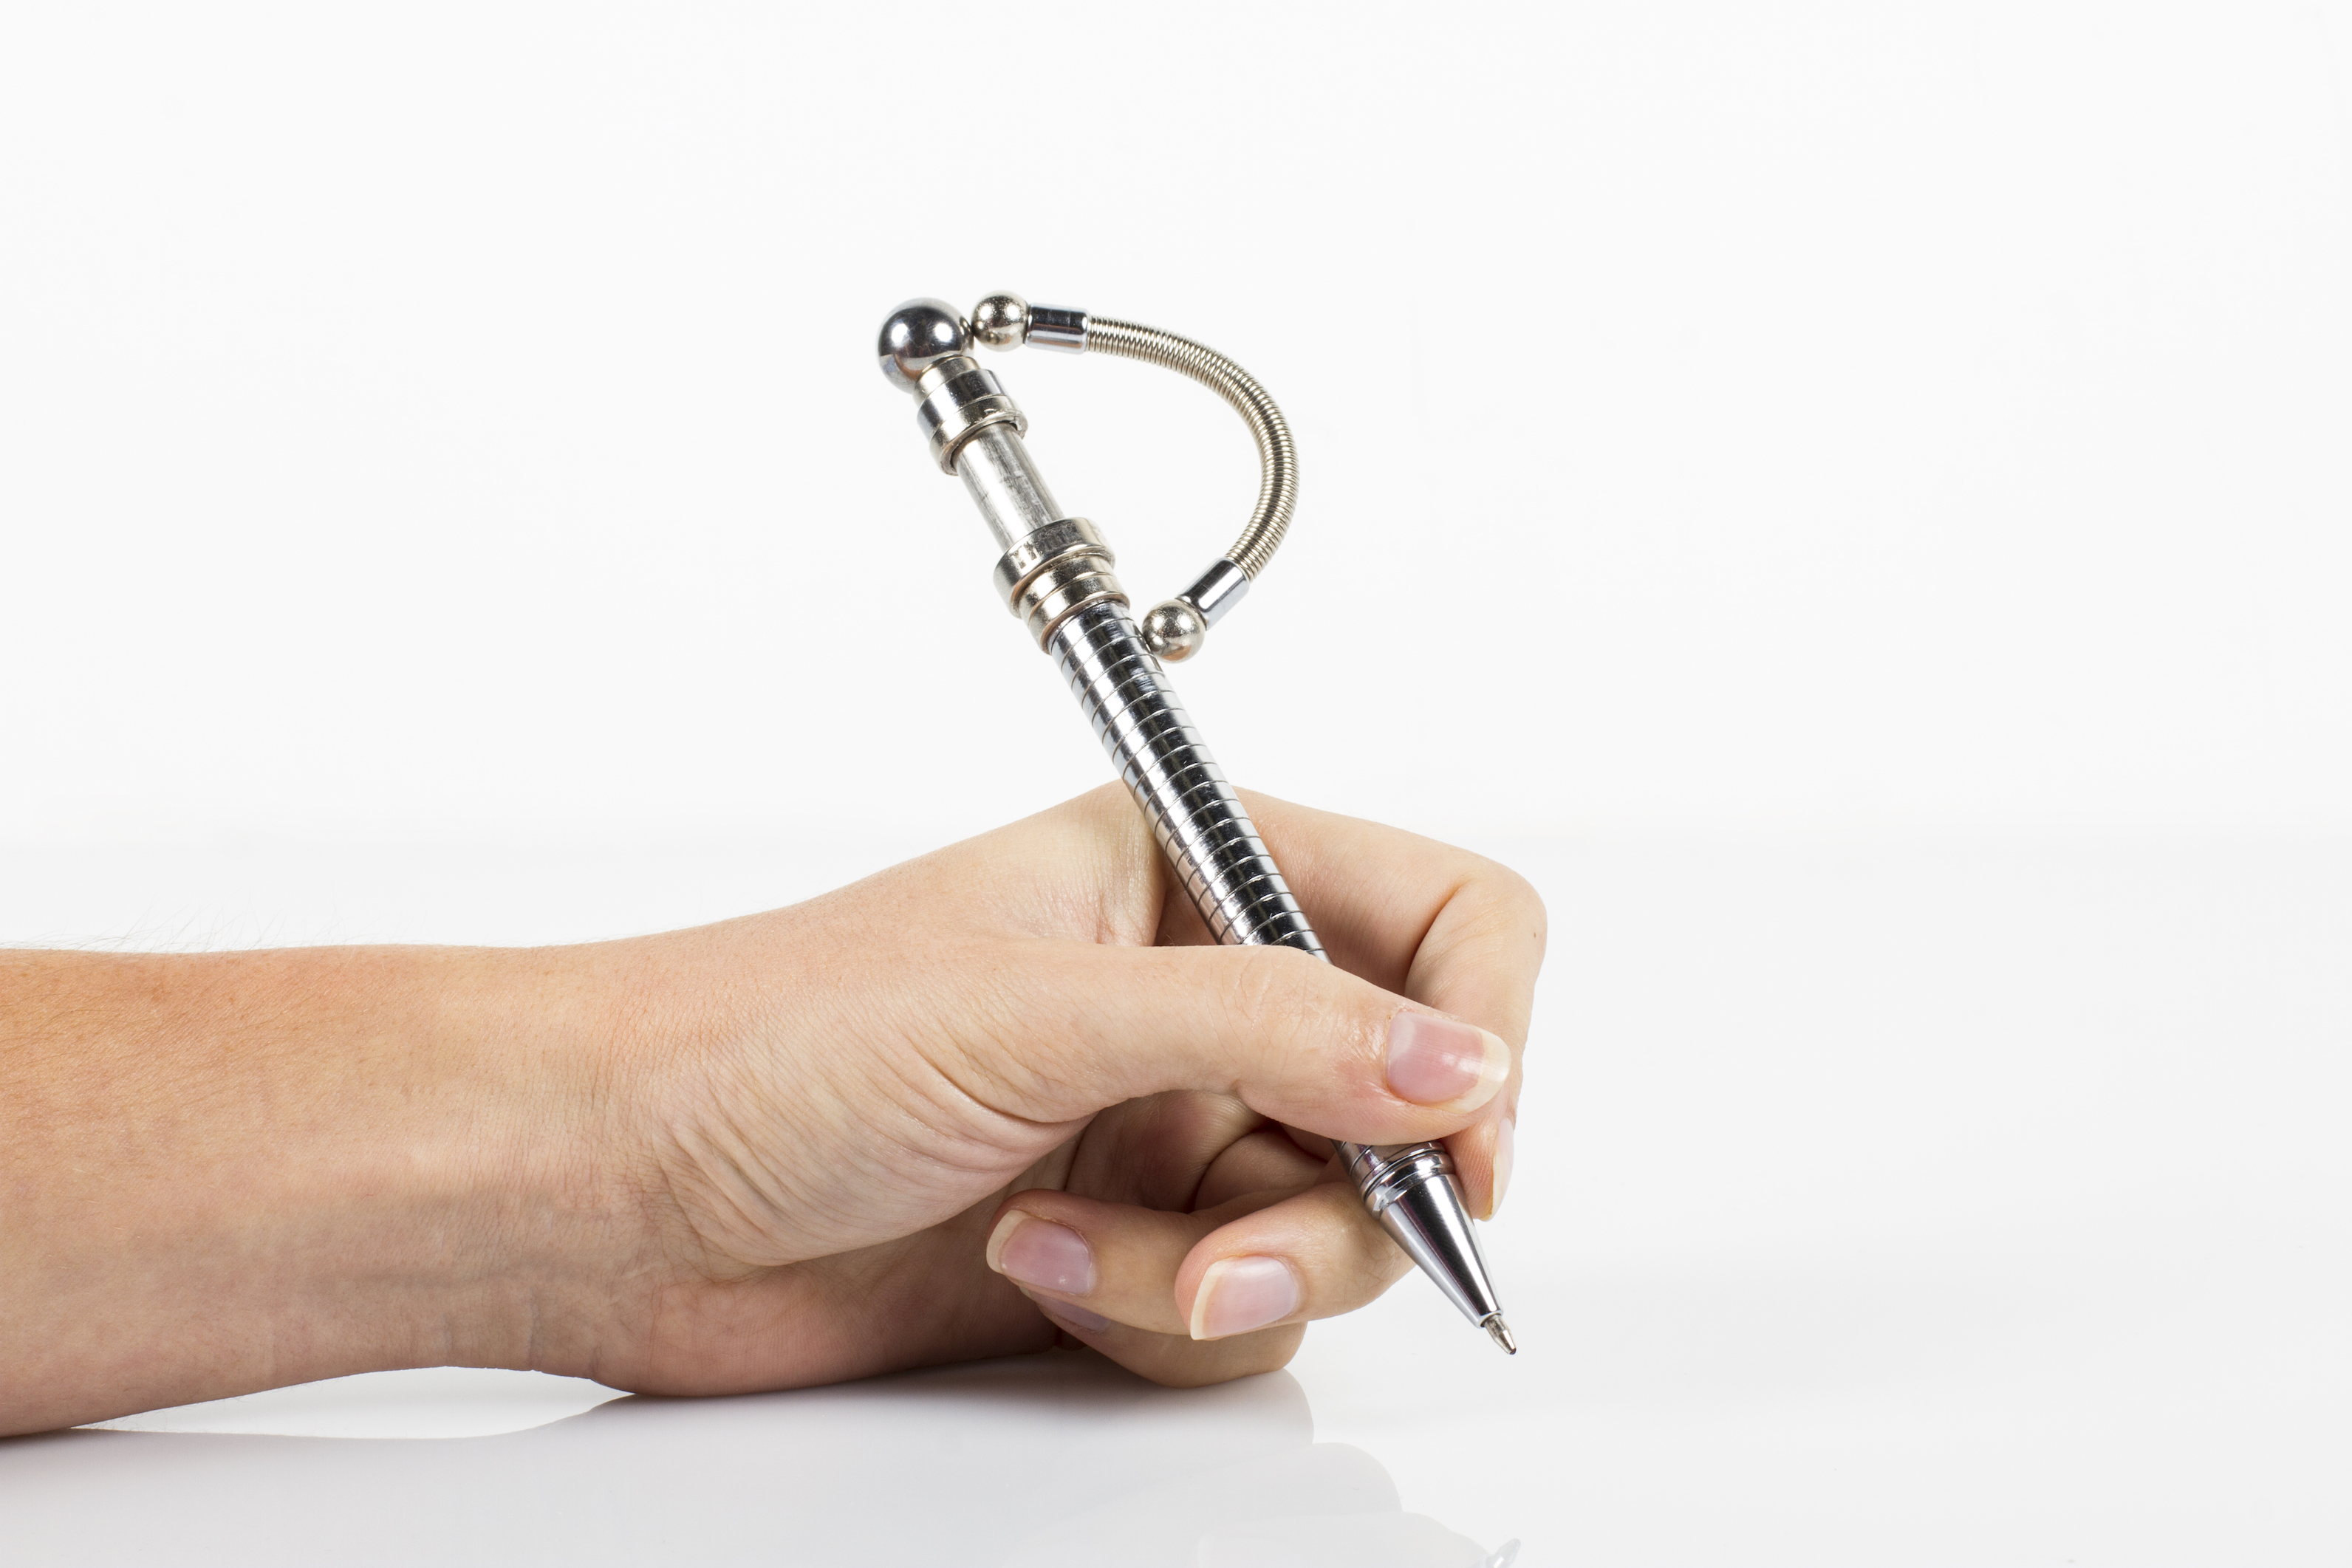 Think Ink Pens Surpass 40k In Funding On Kickstarter To Release New